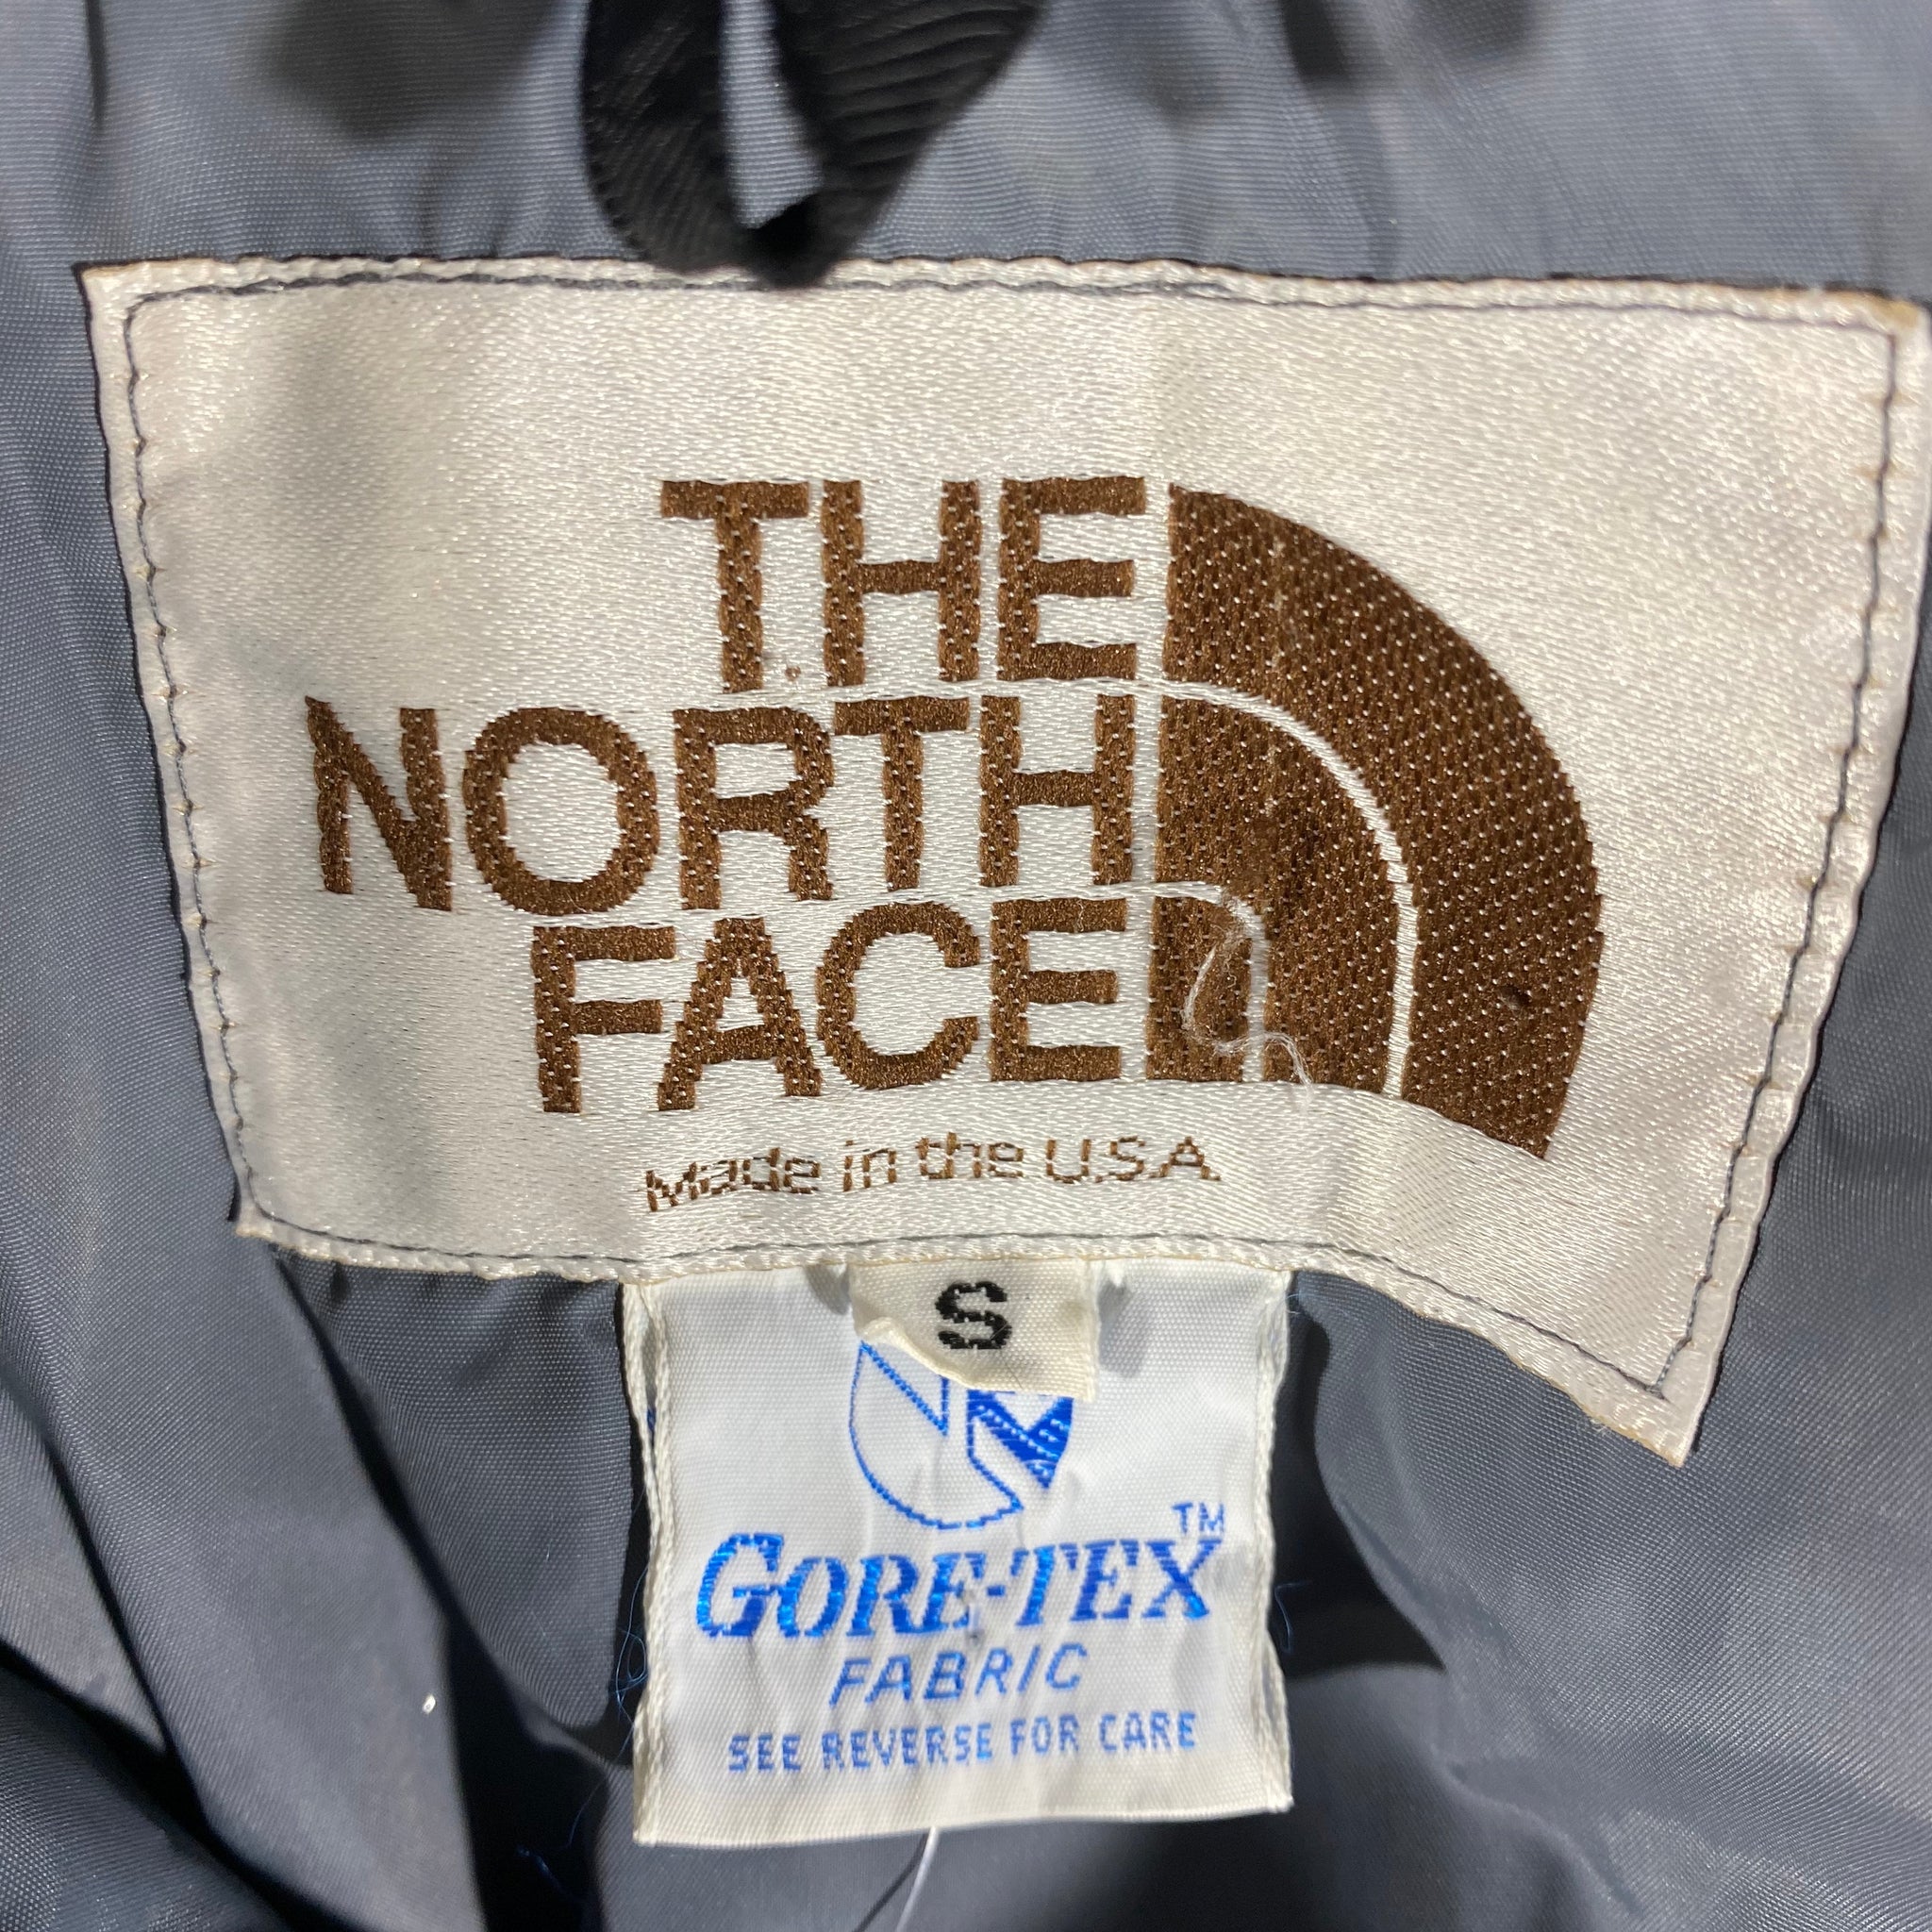 80s Northface goretex jacket Small